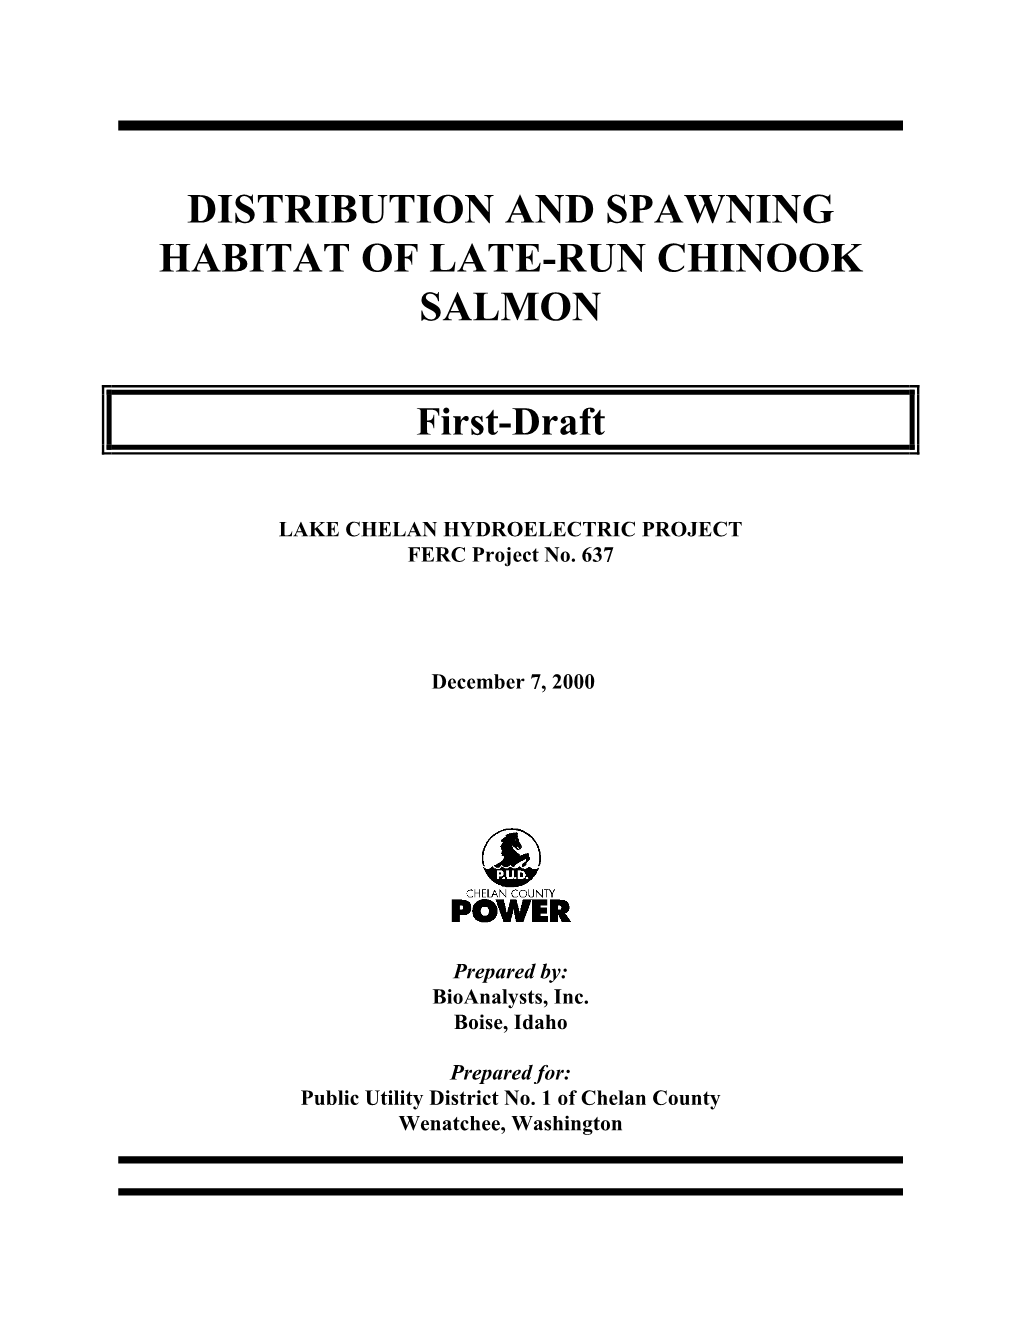 Distribution and Spawning Habitat of Late-Run Chinook Salmon